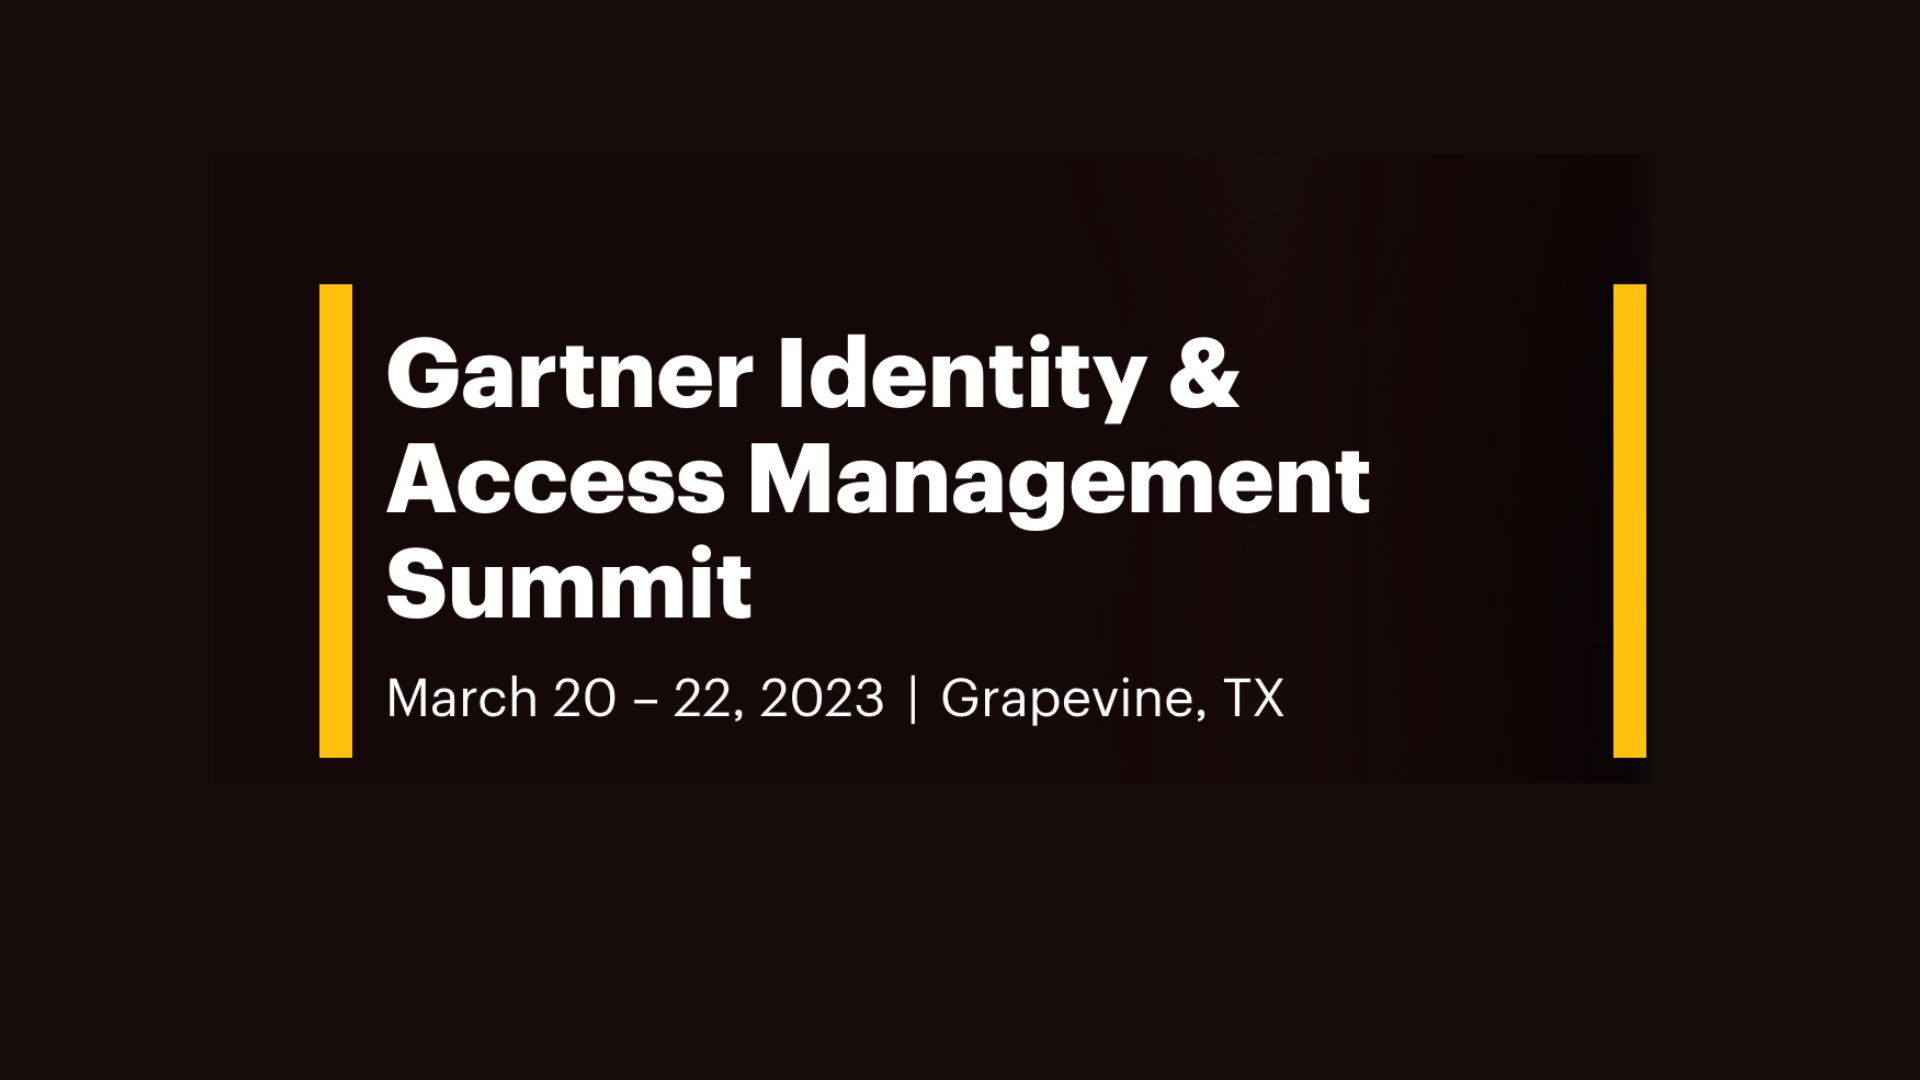 Gartner Identity and Access Management Summit 2023 Britive